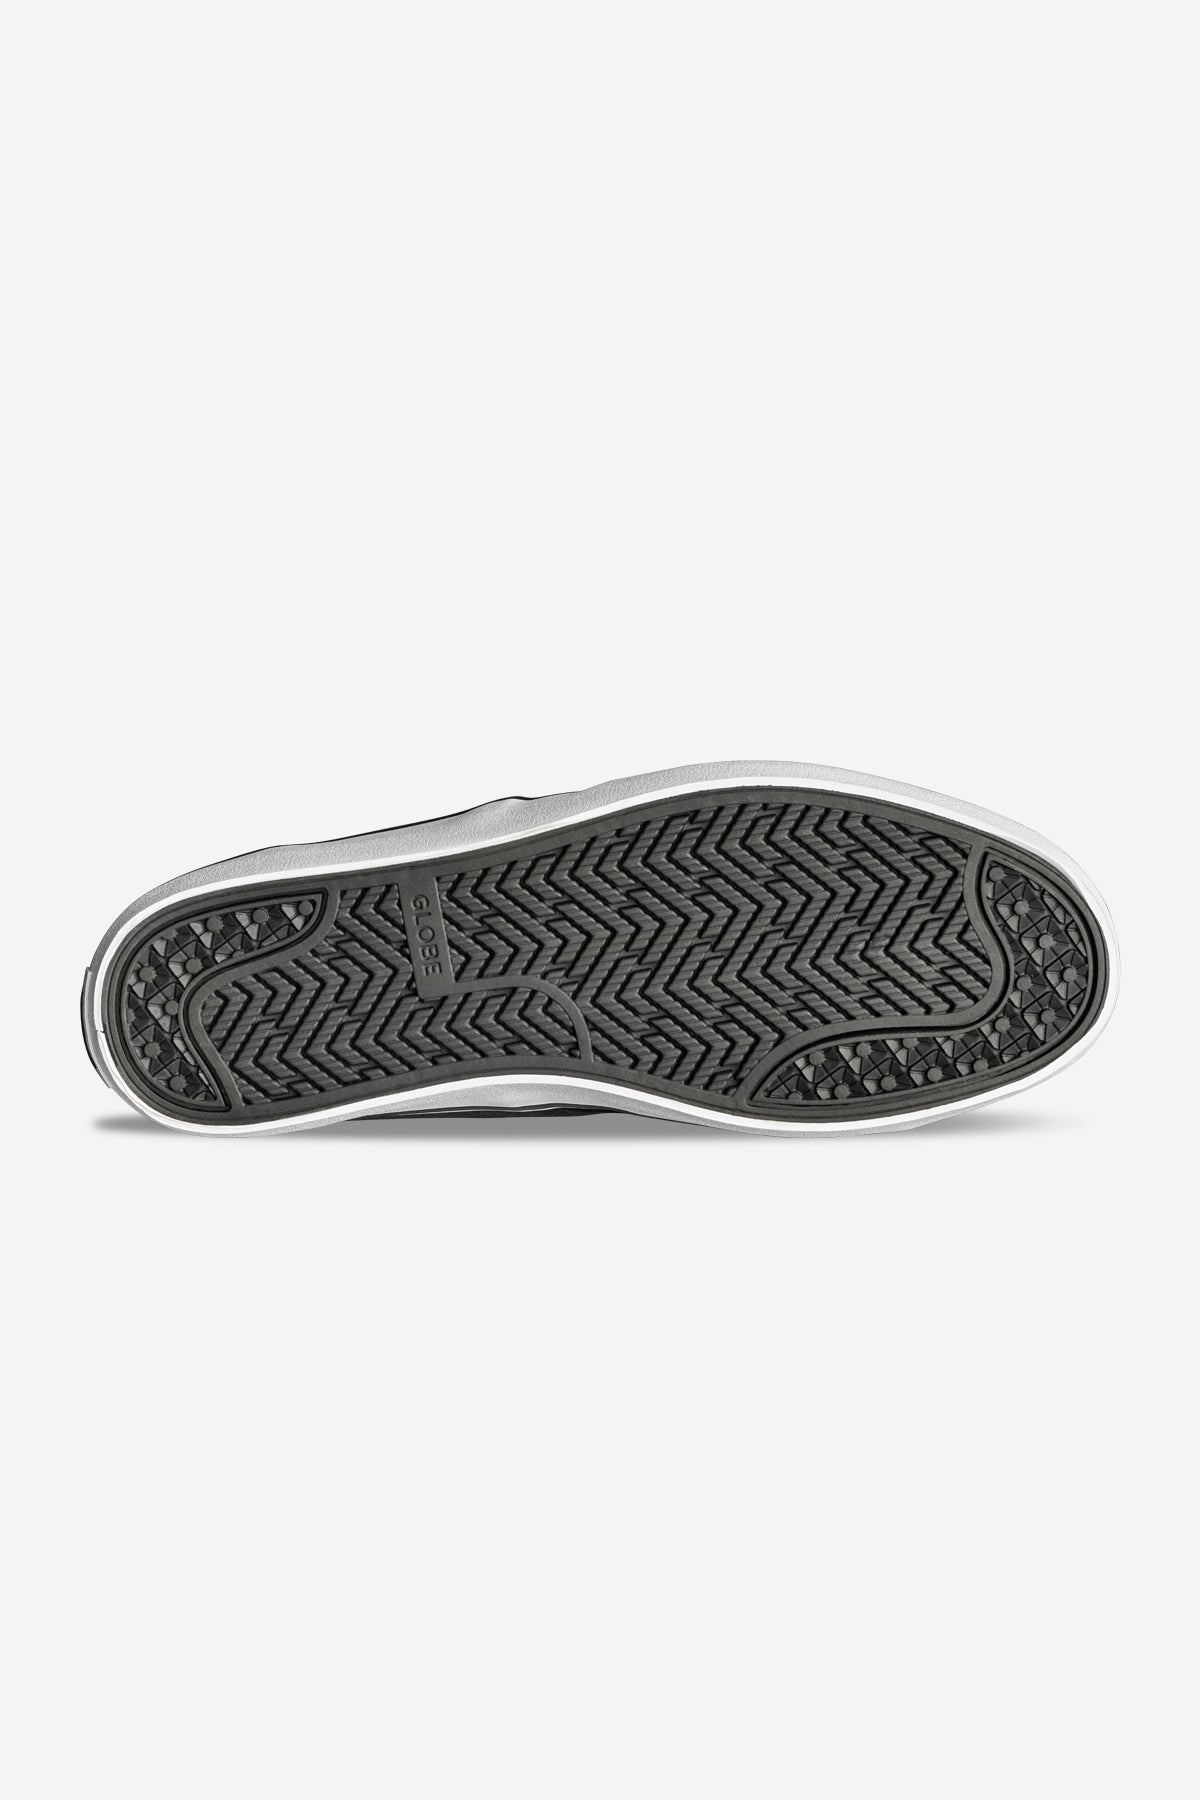 Globe - Motley Ii Strap - Black/White - skateboard Sapatos